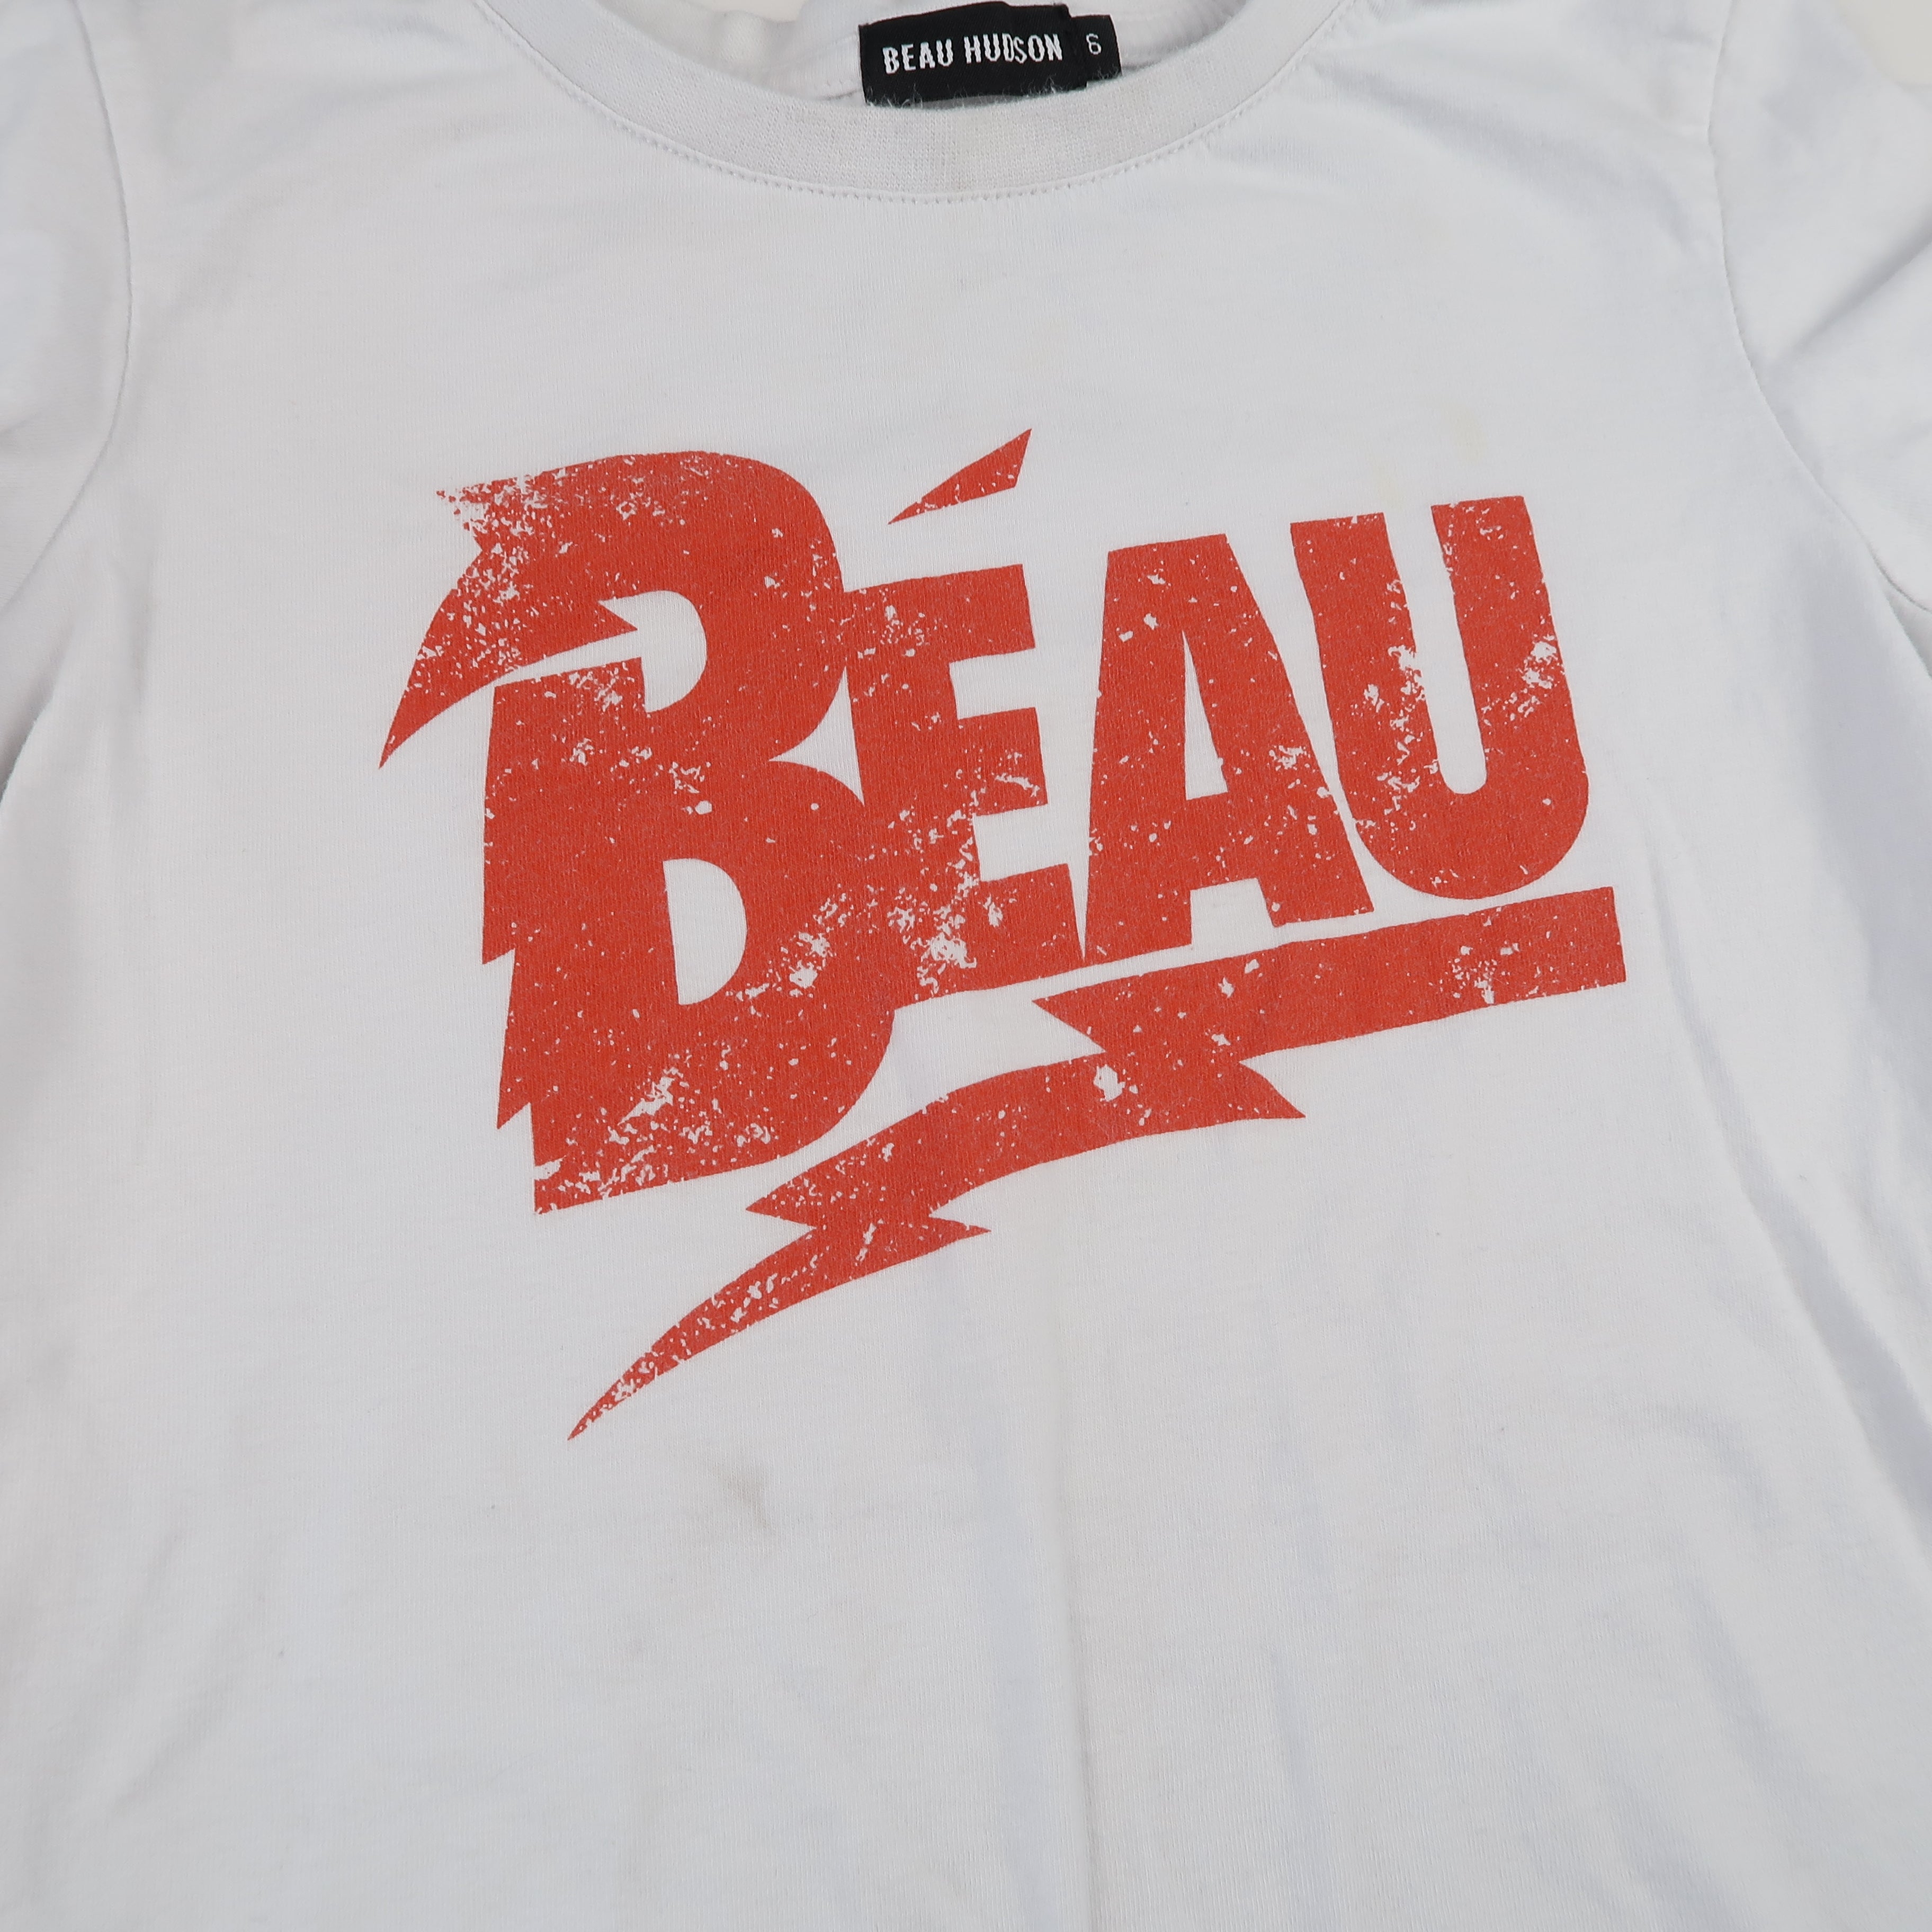 Beau Hudson - T-Shirt (6Y)